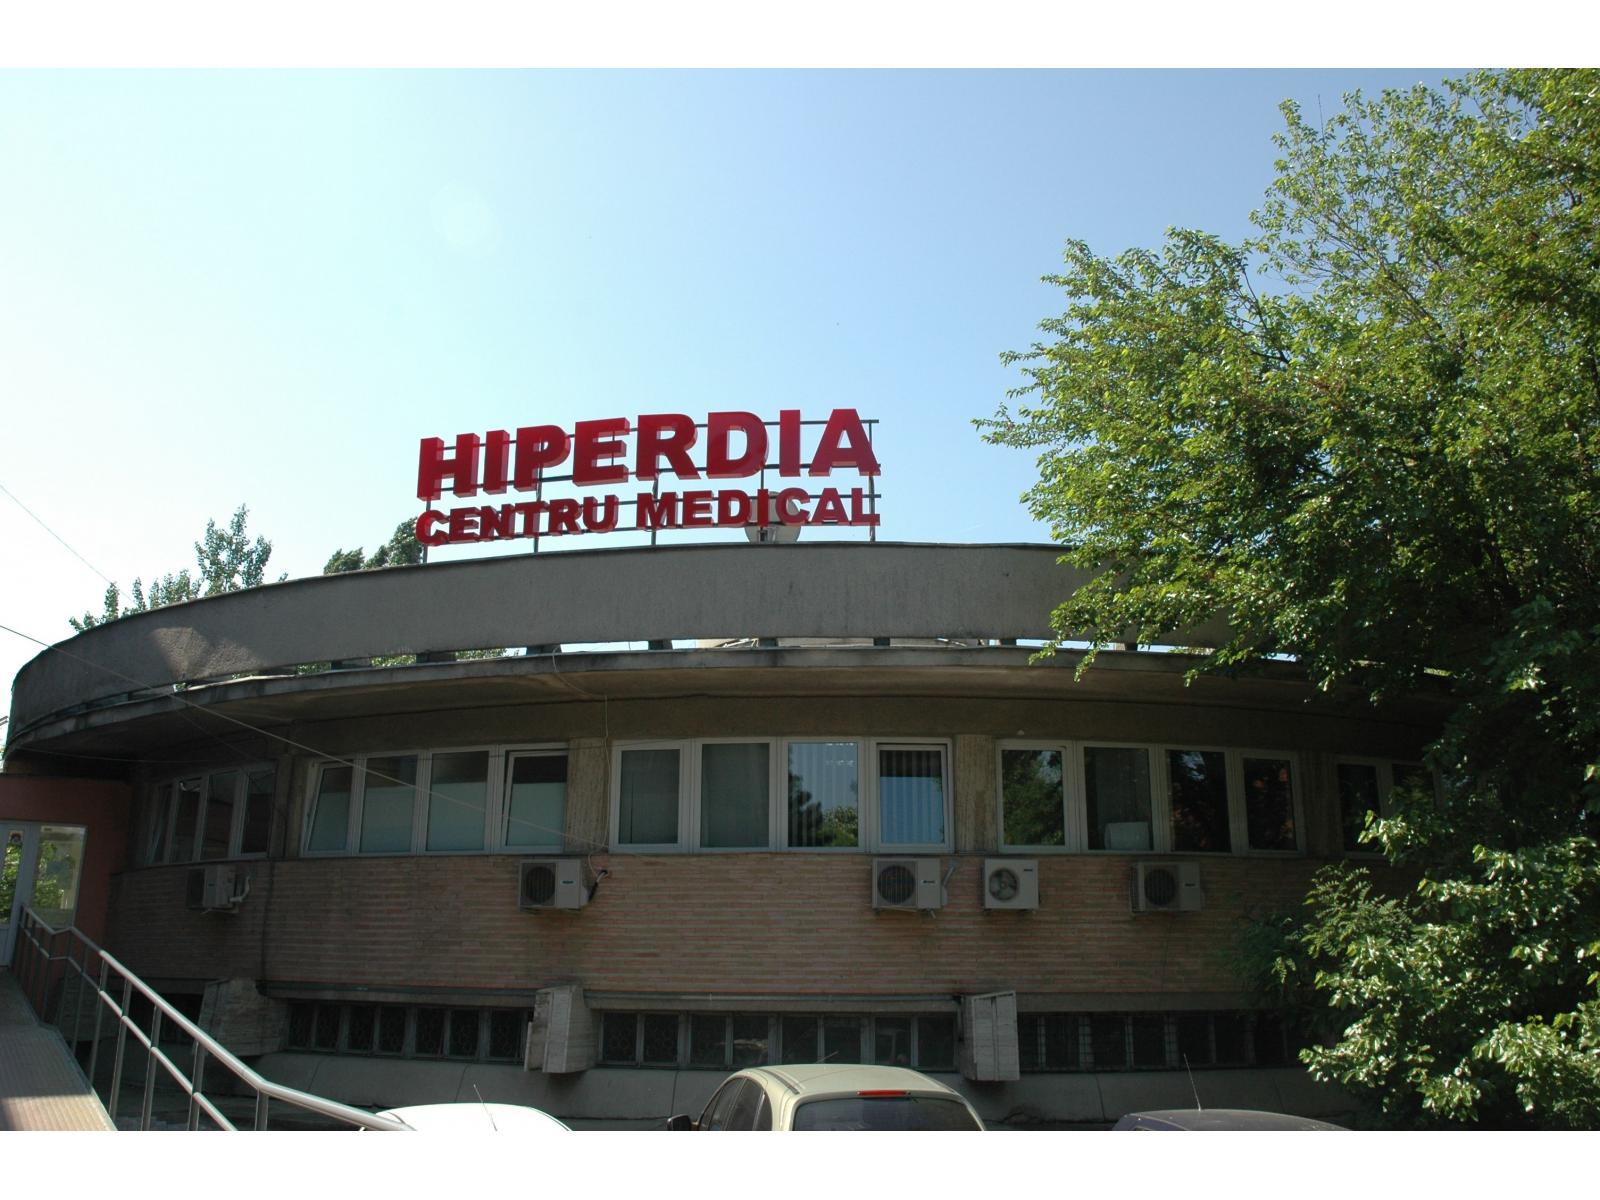 Hiperdia - Centre de diagnostic imagistic si laborator - Bagdasar.JPG